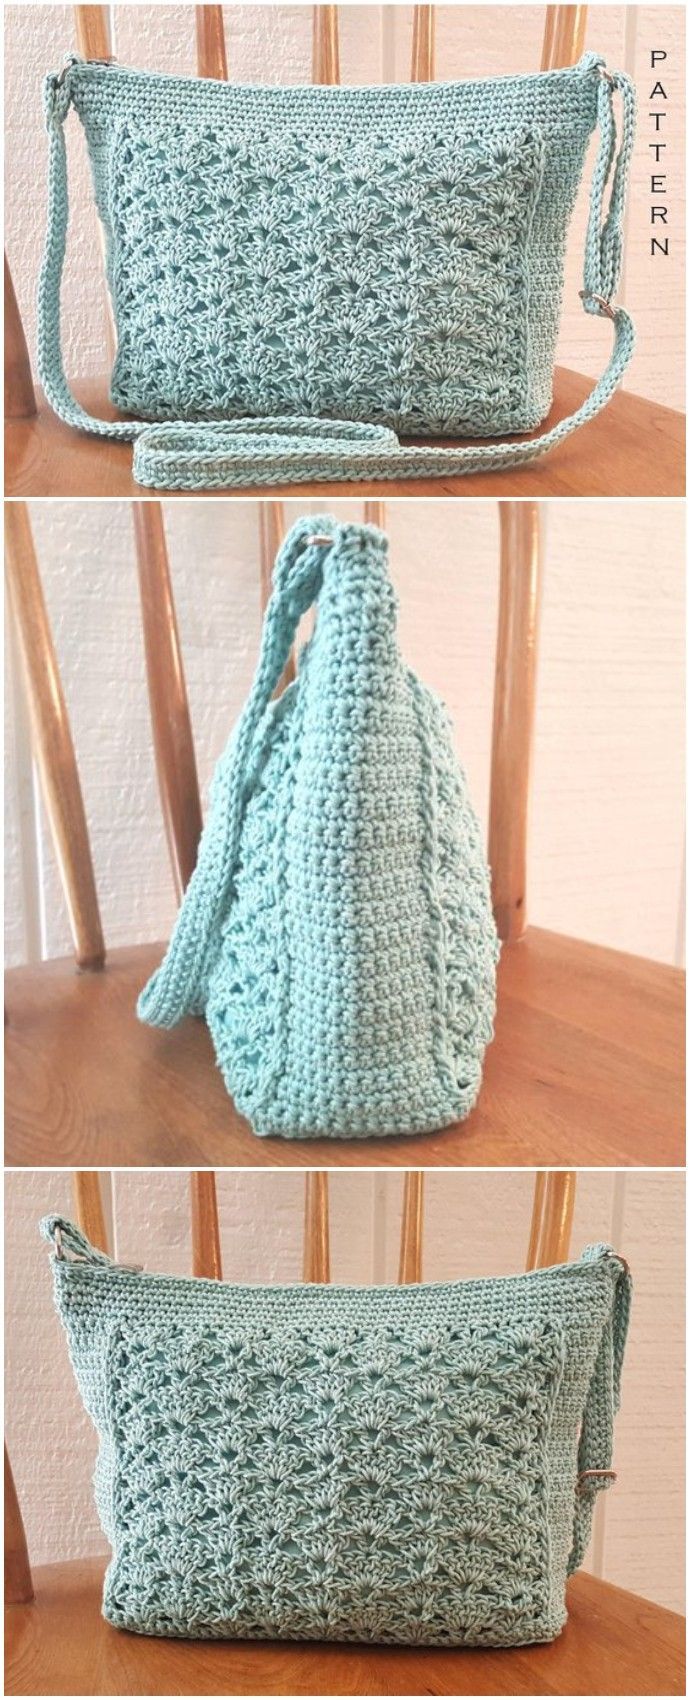 Crochet Bag Pattern - Einfache Häkelanleitungen